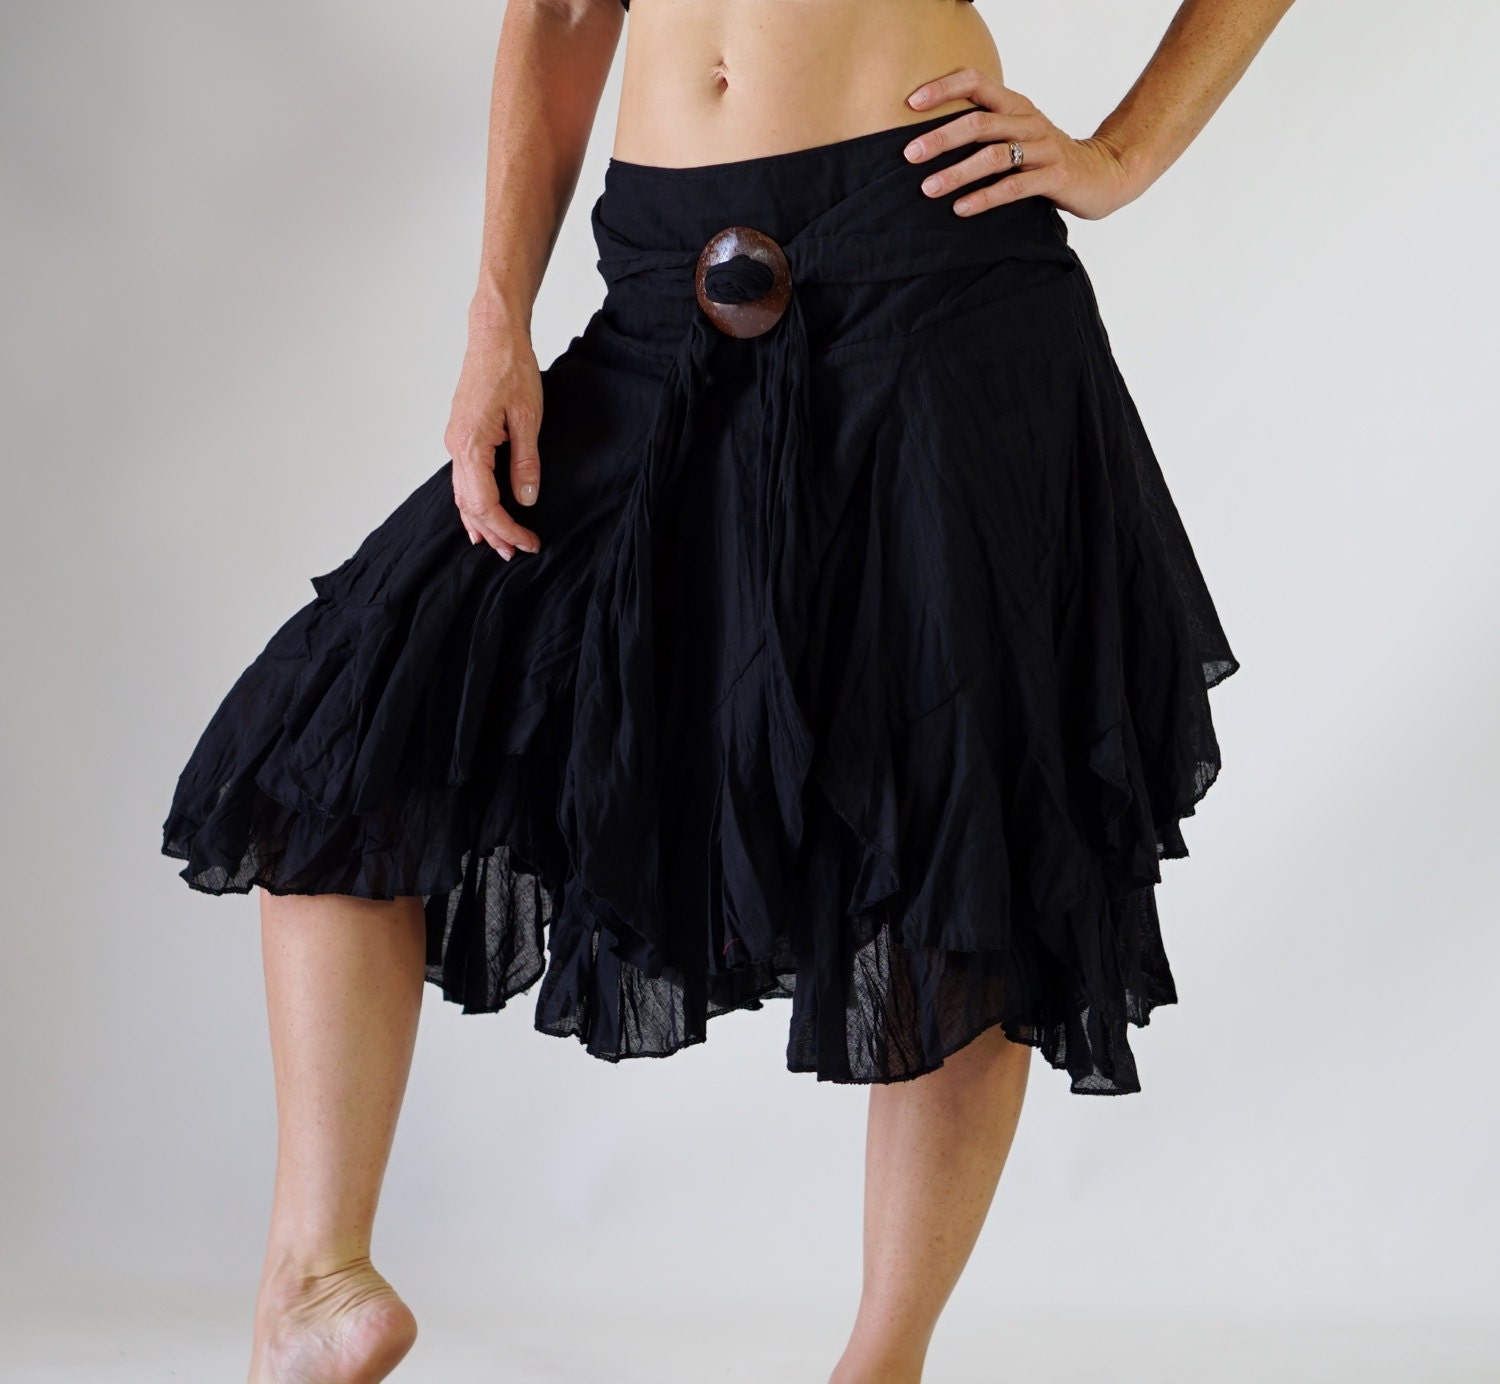 willow skirt black renaissance festival costumeszootzugarb